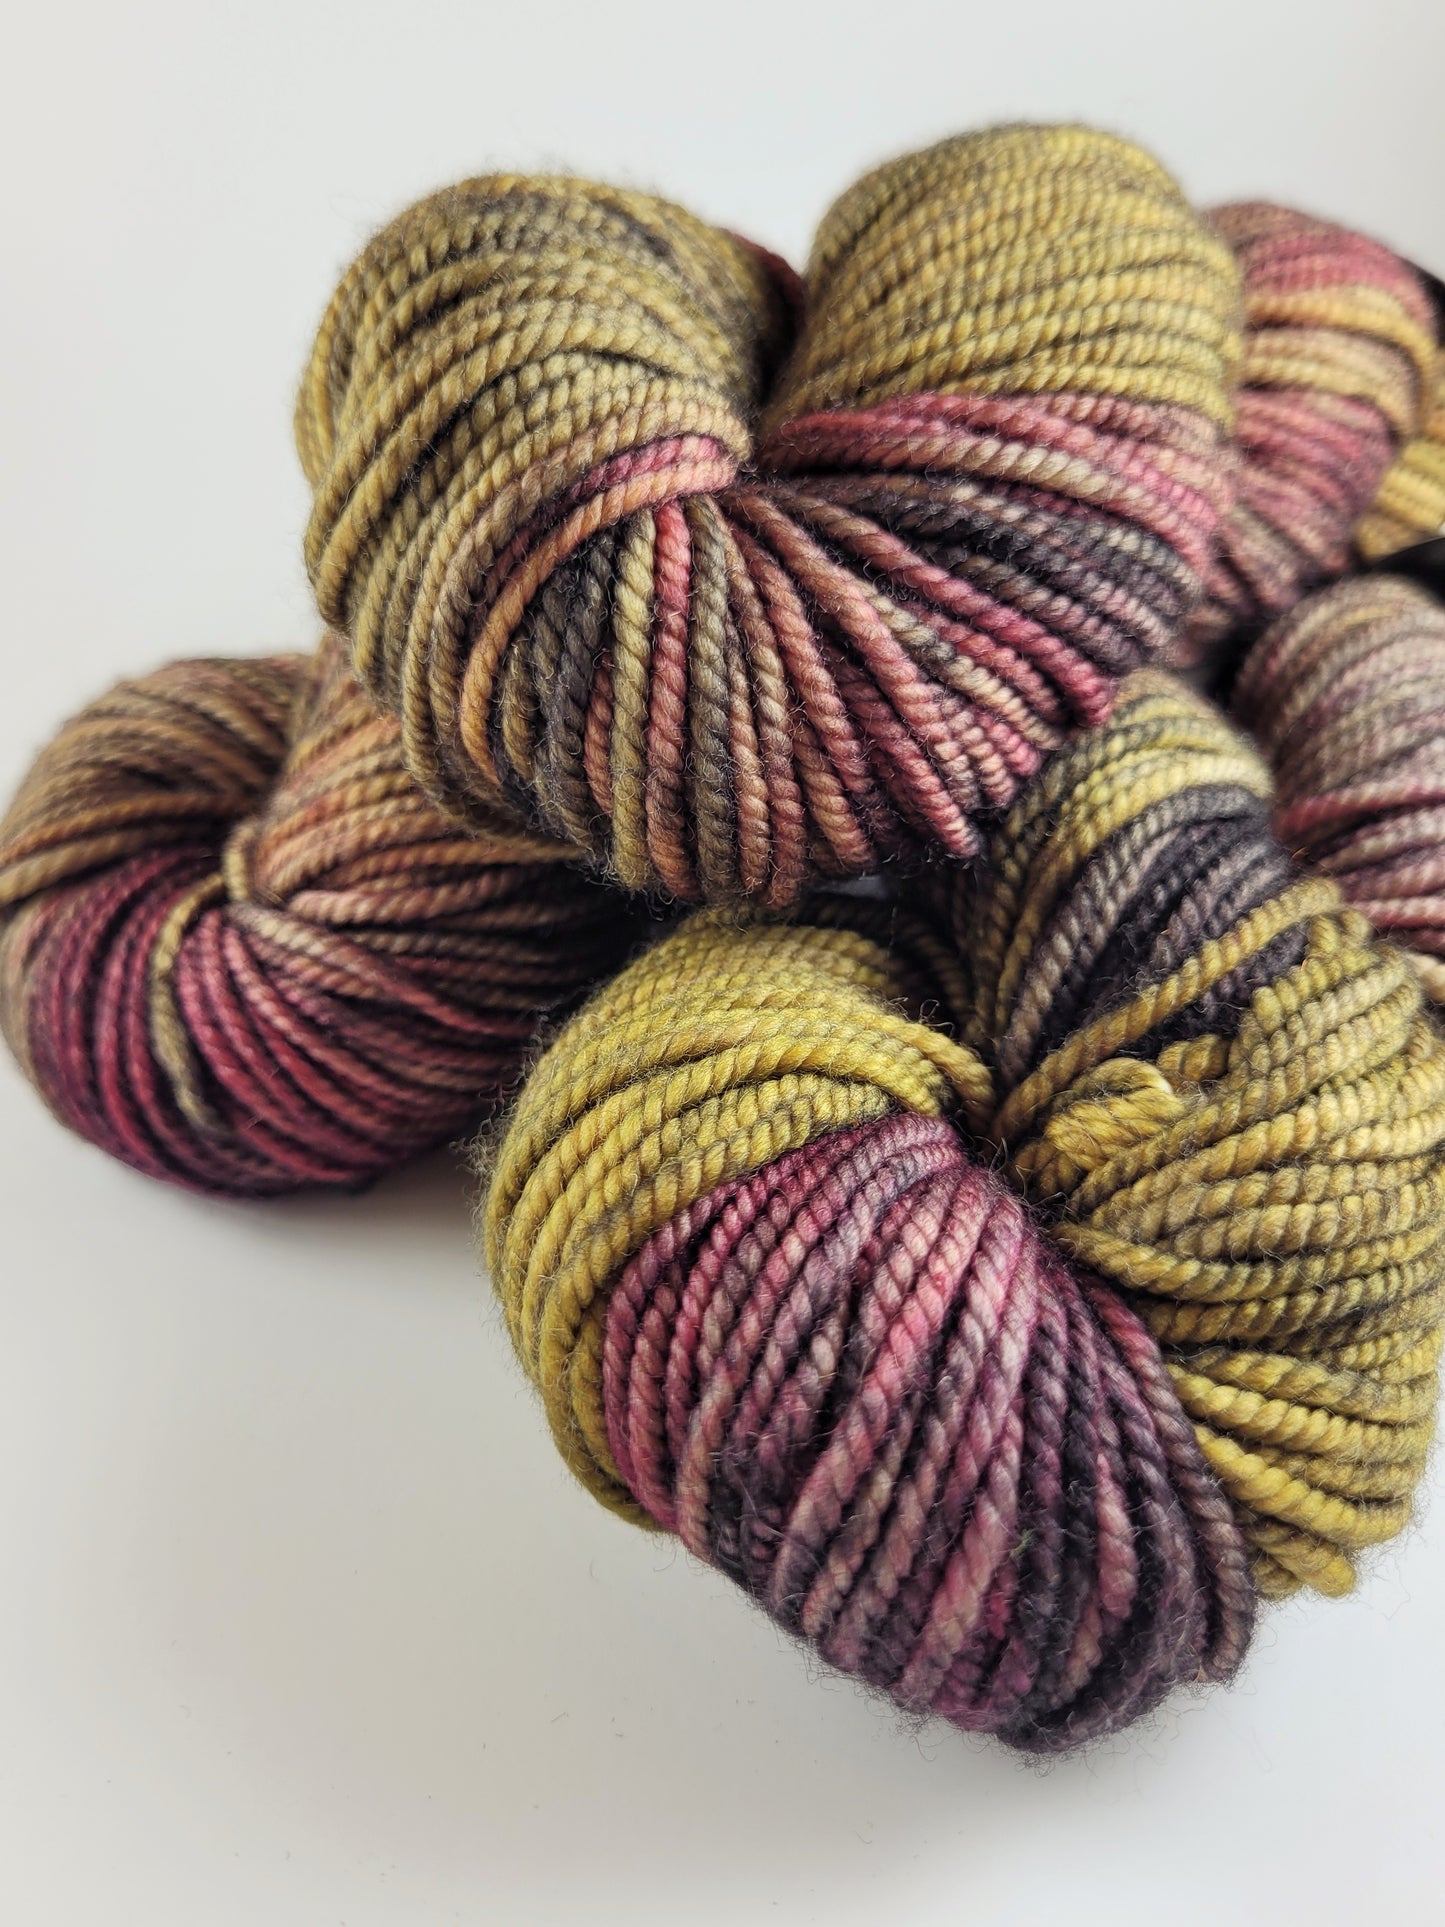 Bouncy Wool-Bulky, Color: October Dusk